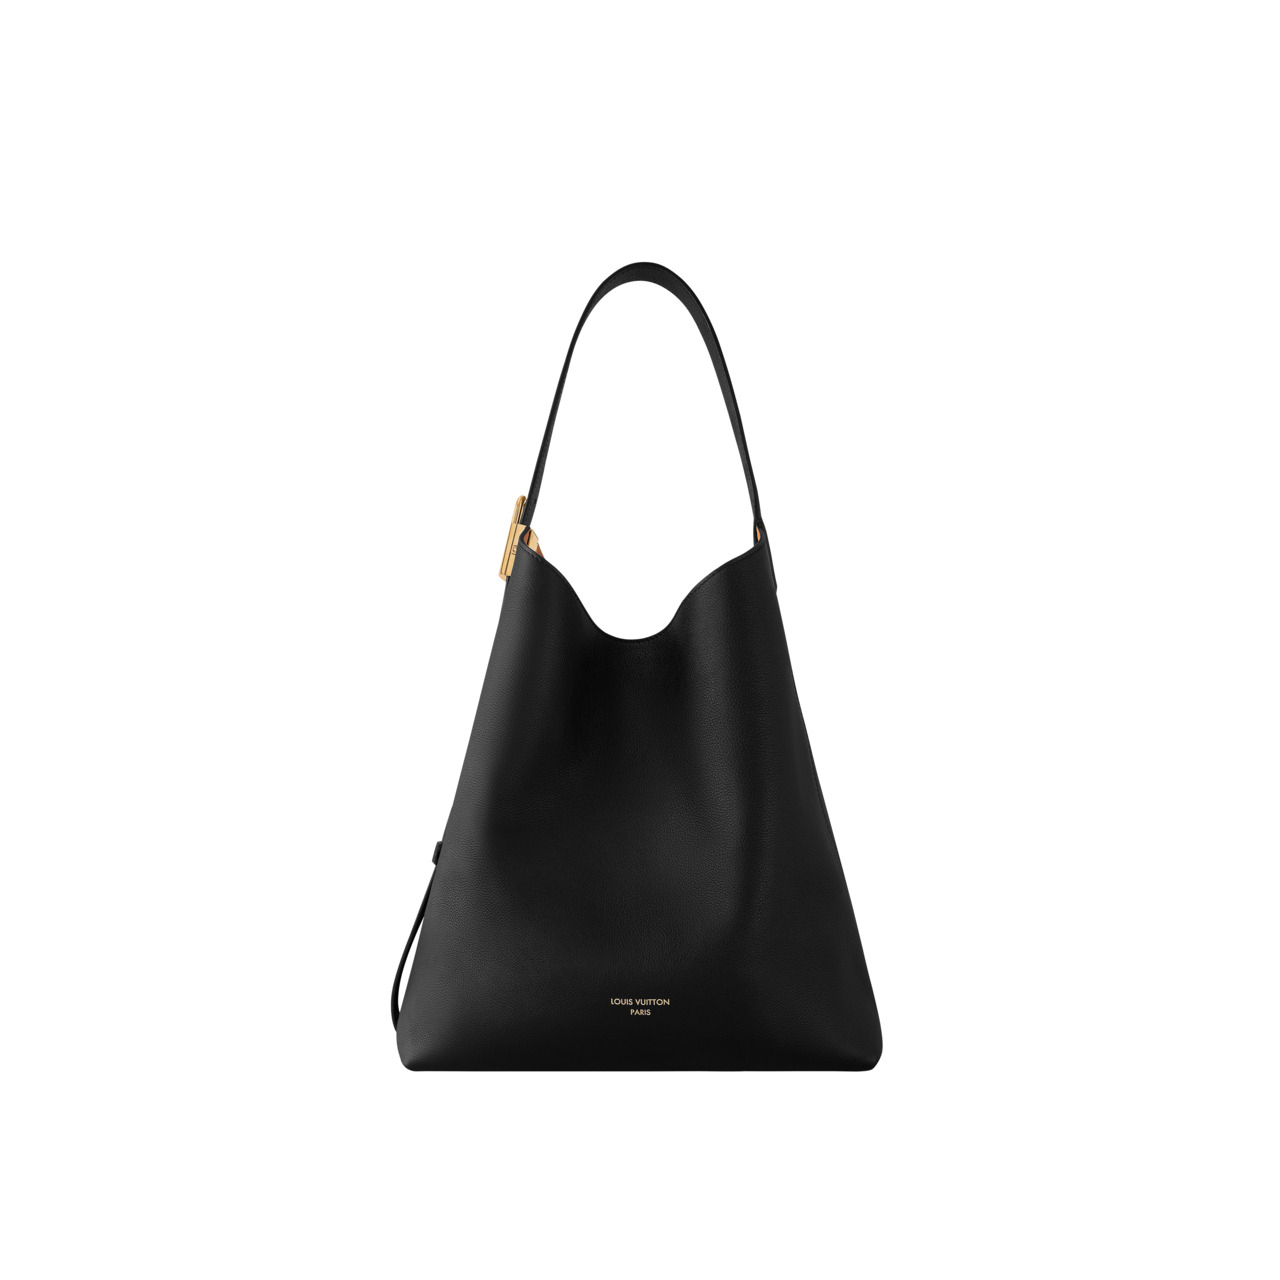 Louis Vuitton slouchy handbag in black